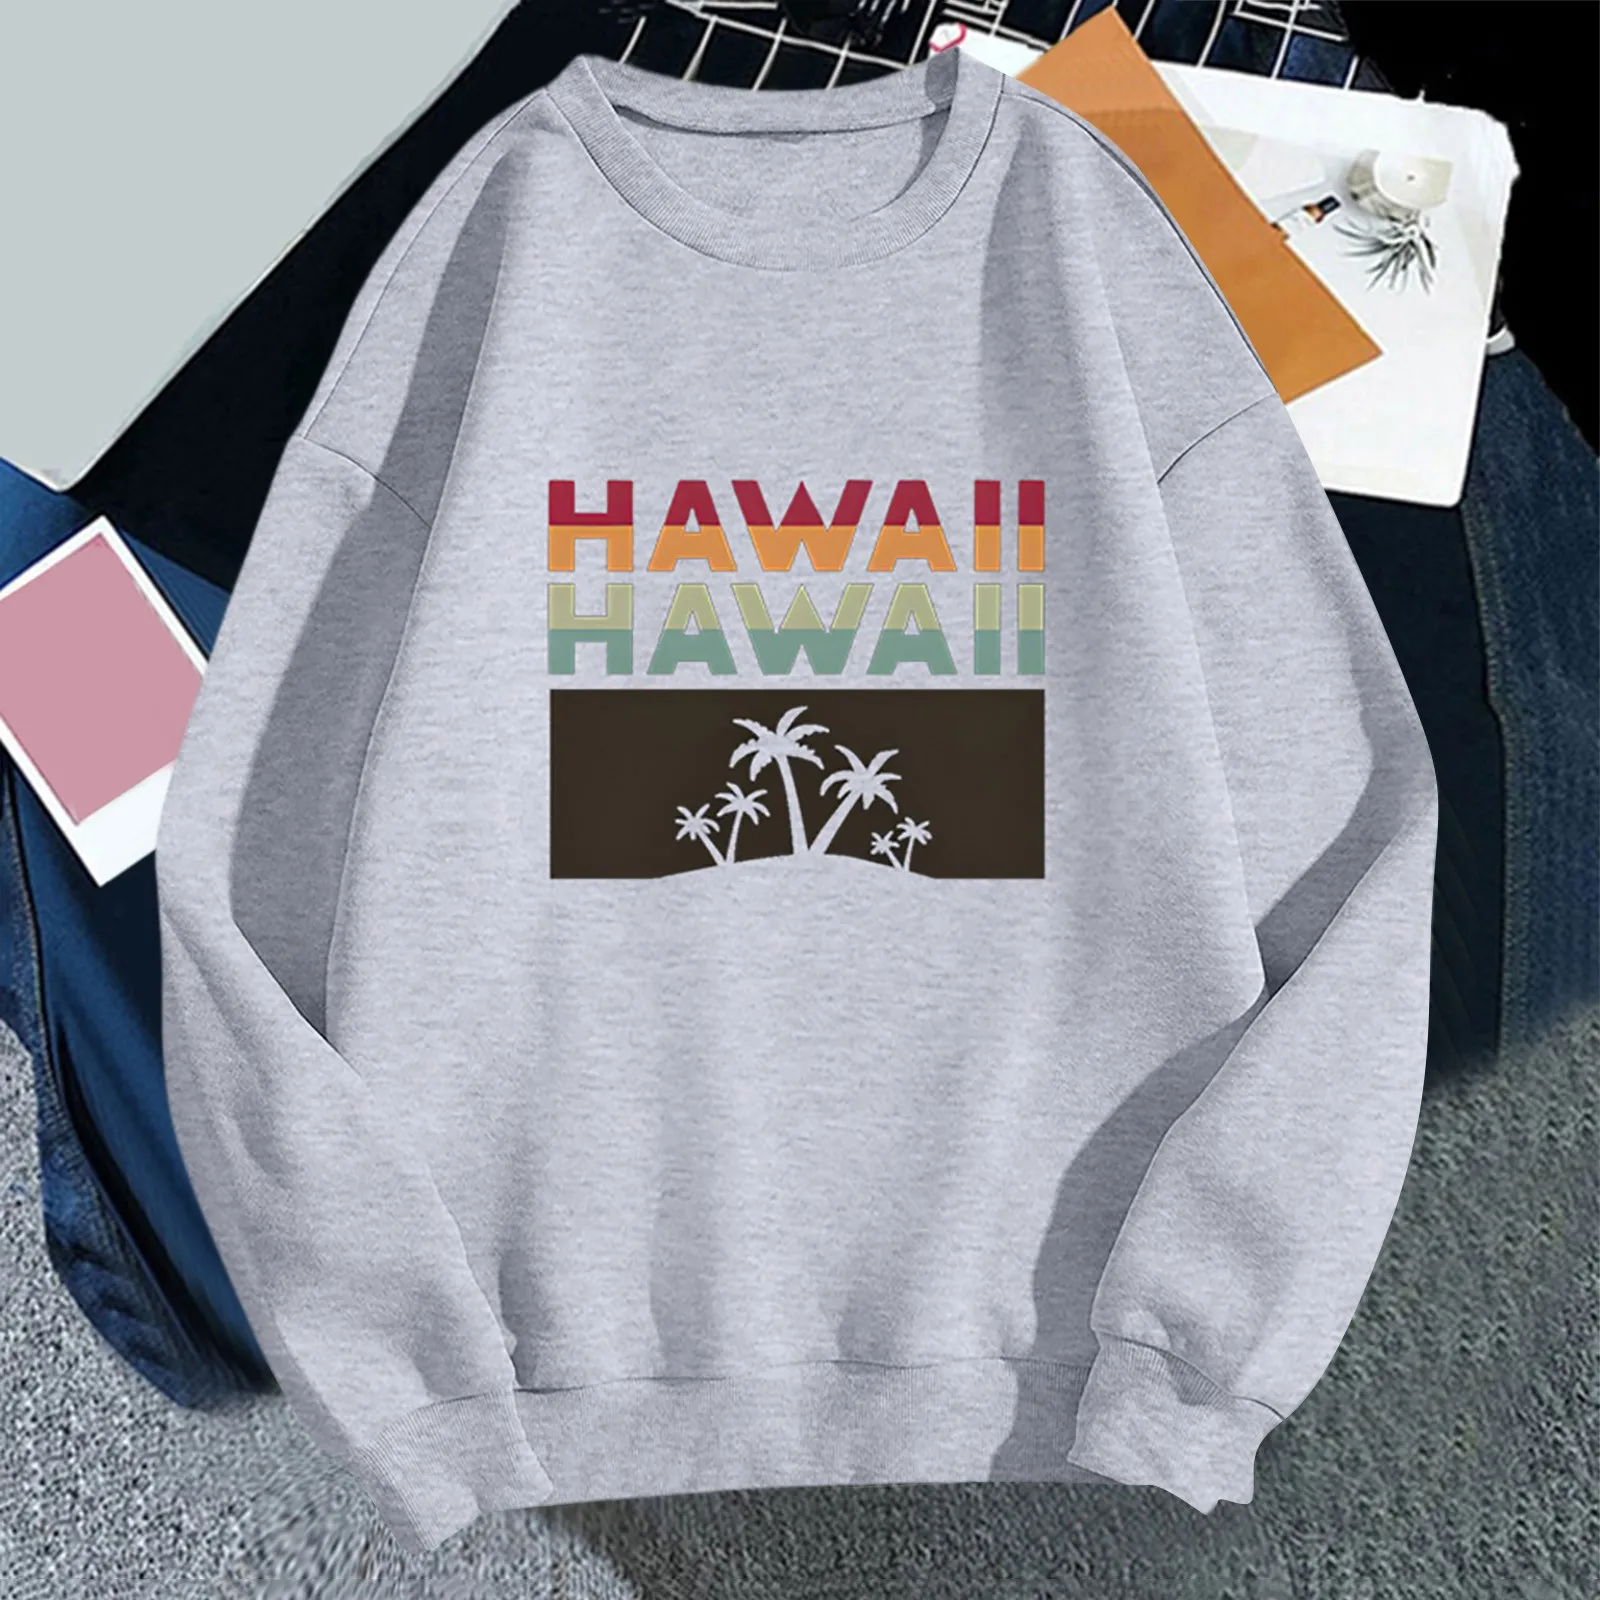 

Hawaii Beach Creativity Splicing Prints Women Hoody Crewneck Comfortable Hoodies Loose Soft Tops Woman Pullovers Autumn Winter